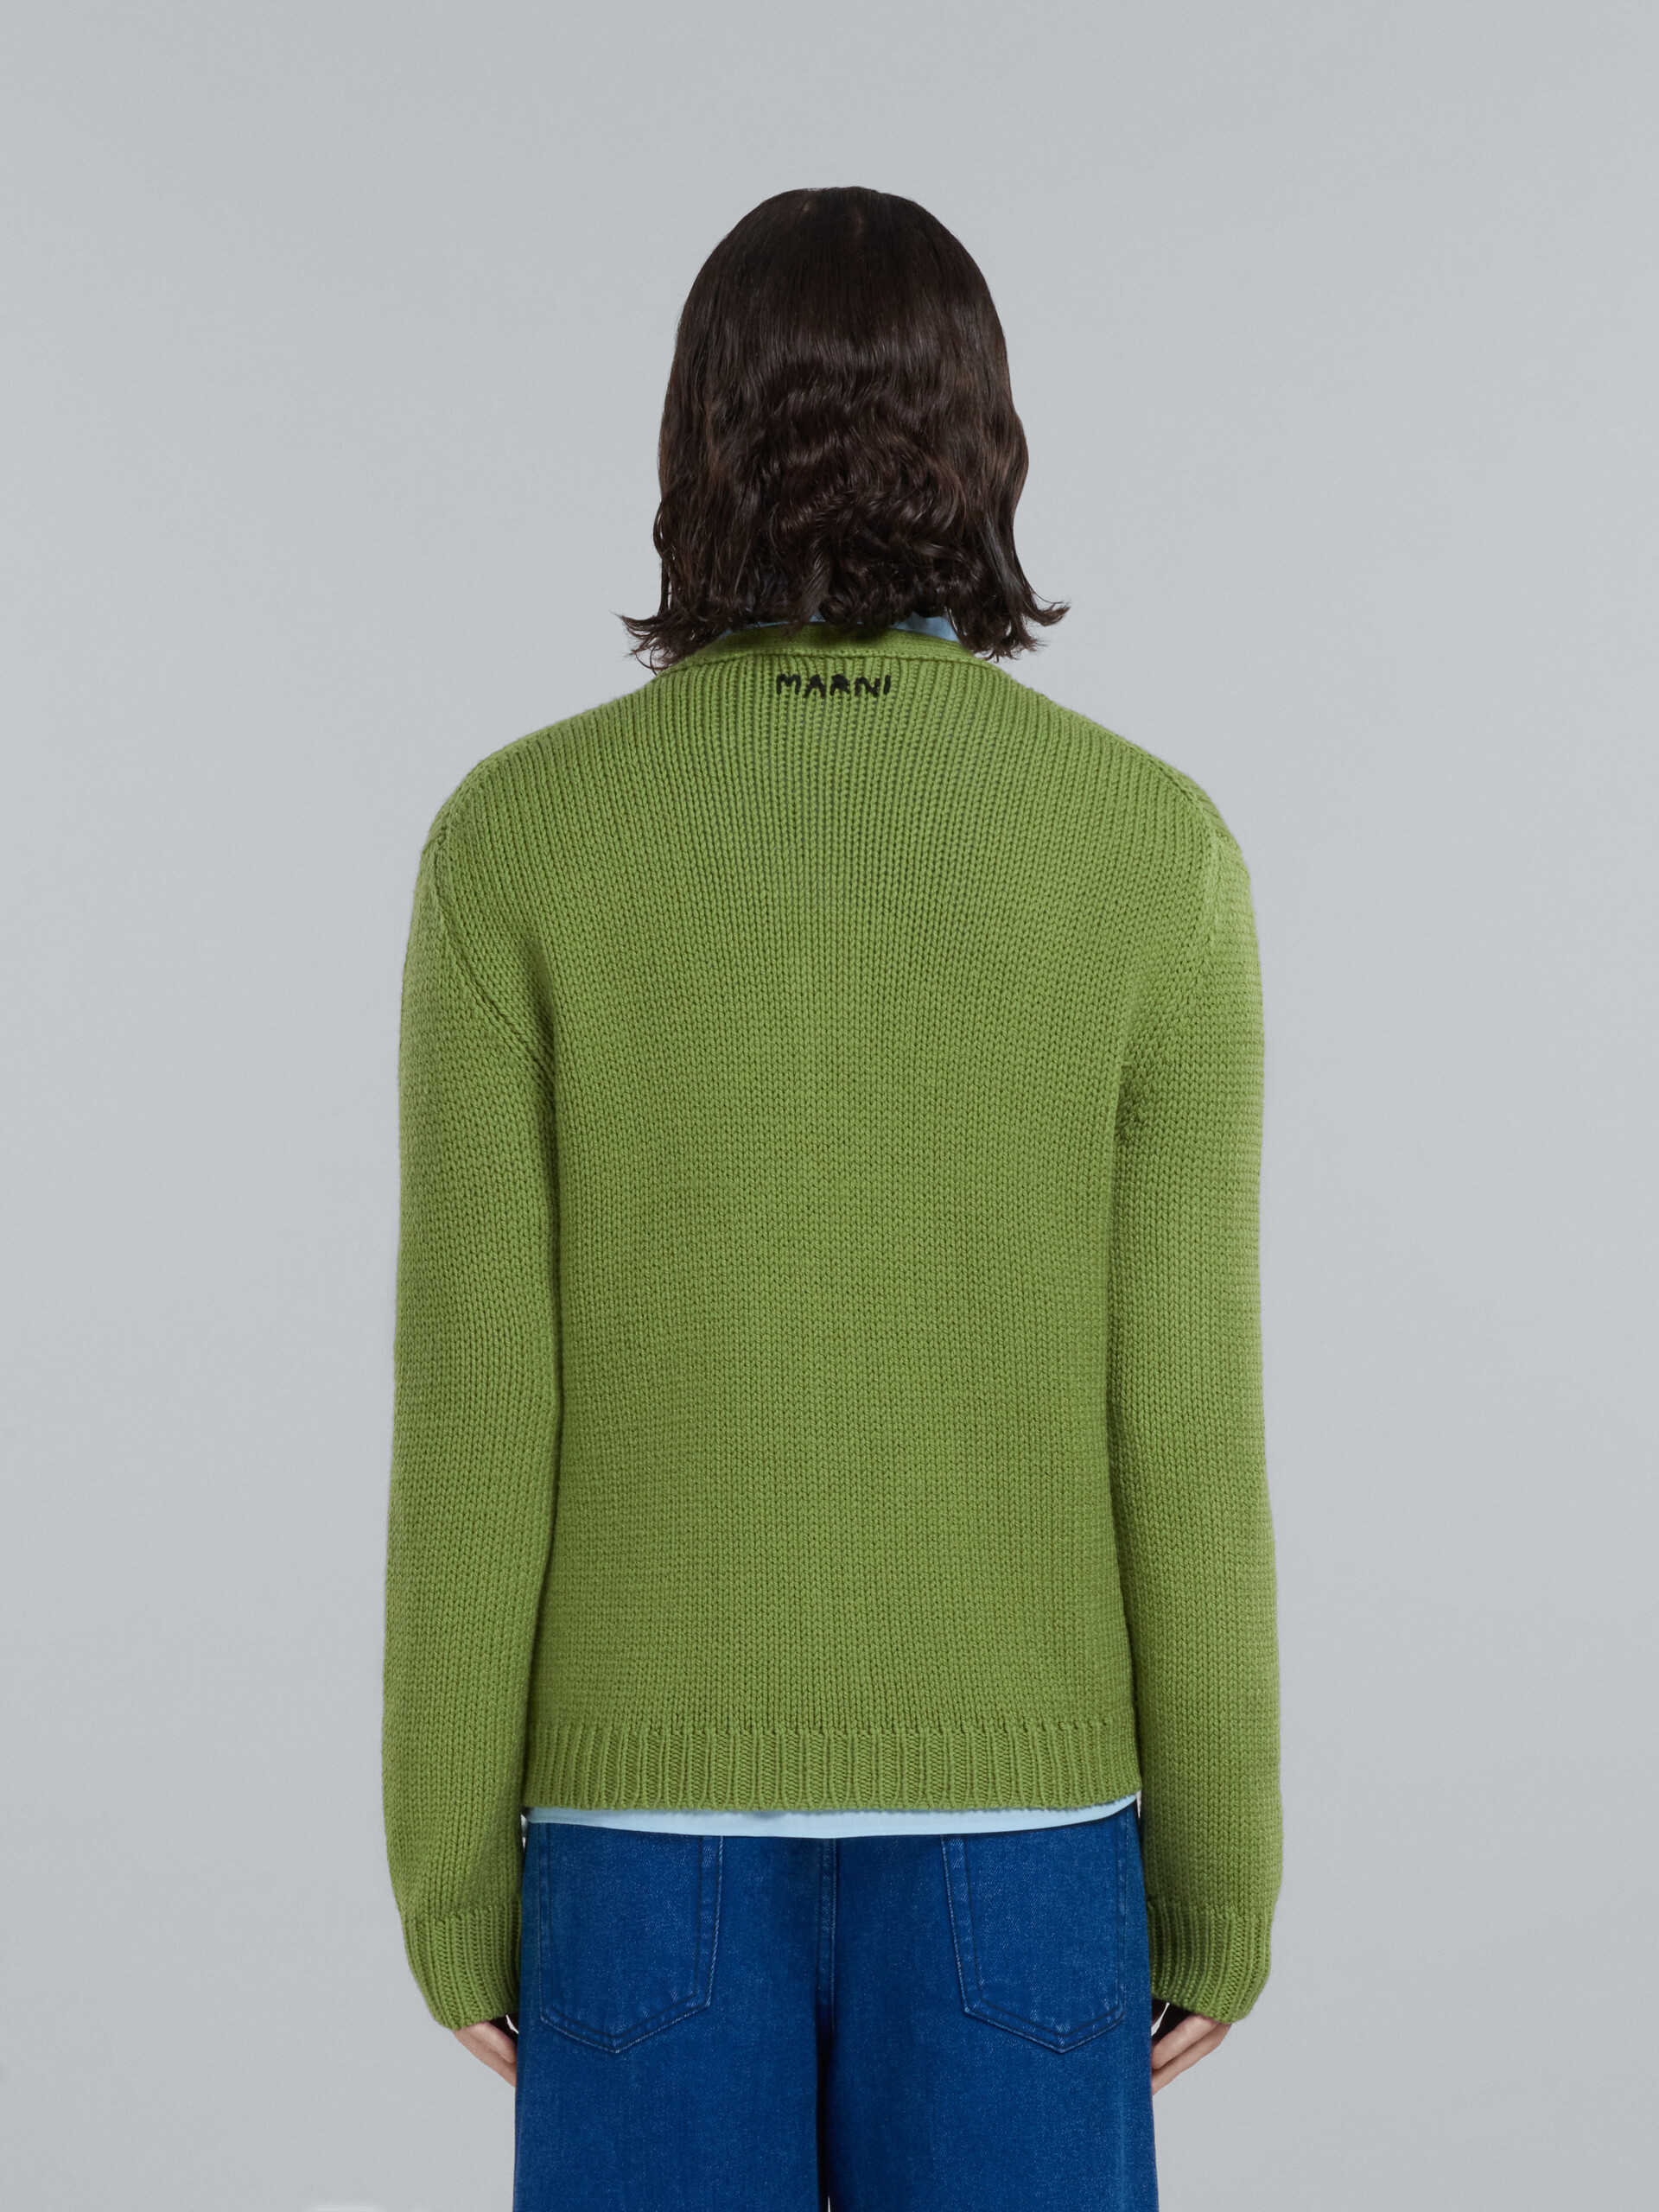 Green wool cardigan - Pullovers - Image 3